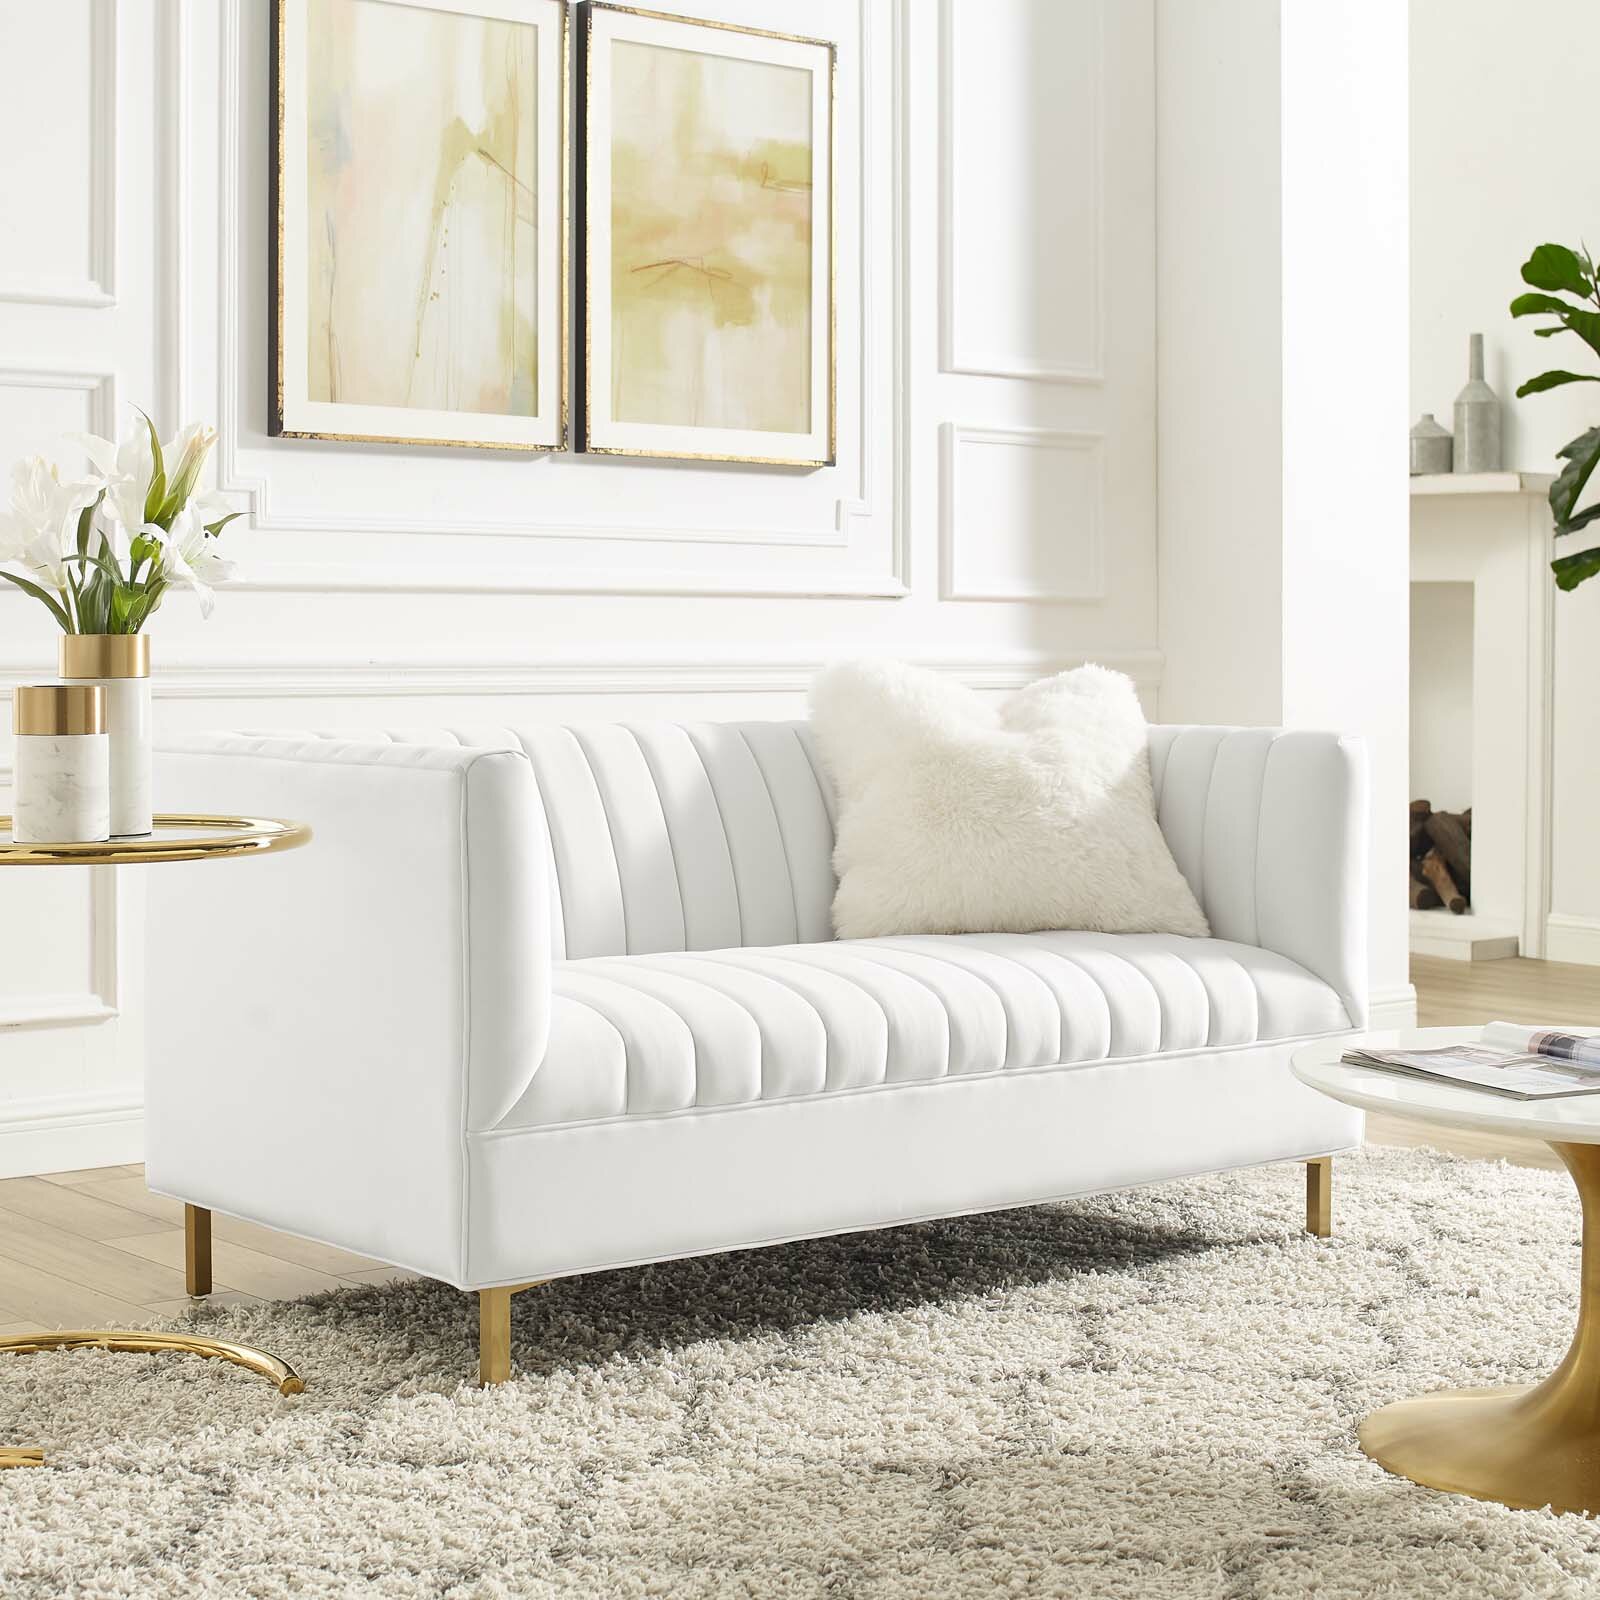 60 Inch Small Tufted Sofa In White Velvet Gold Legs Luxurious E Saving Furniture For Apartment Loft Living Room Bedroom Or Home Office Interior Design Ideas